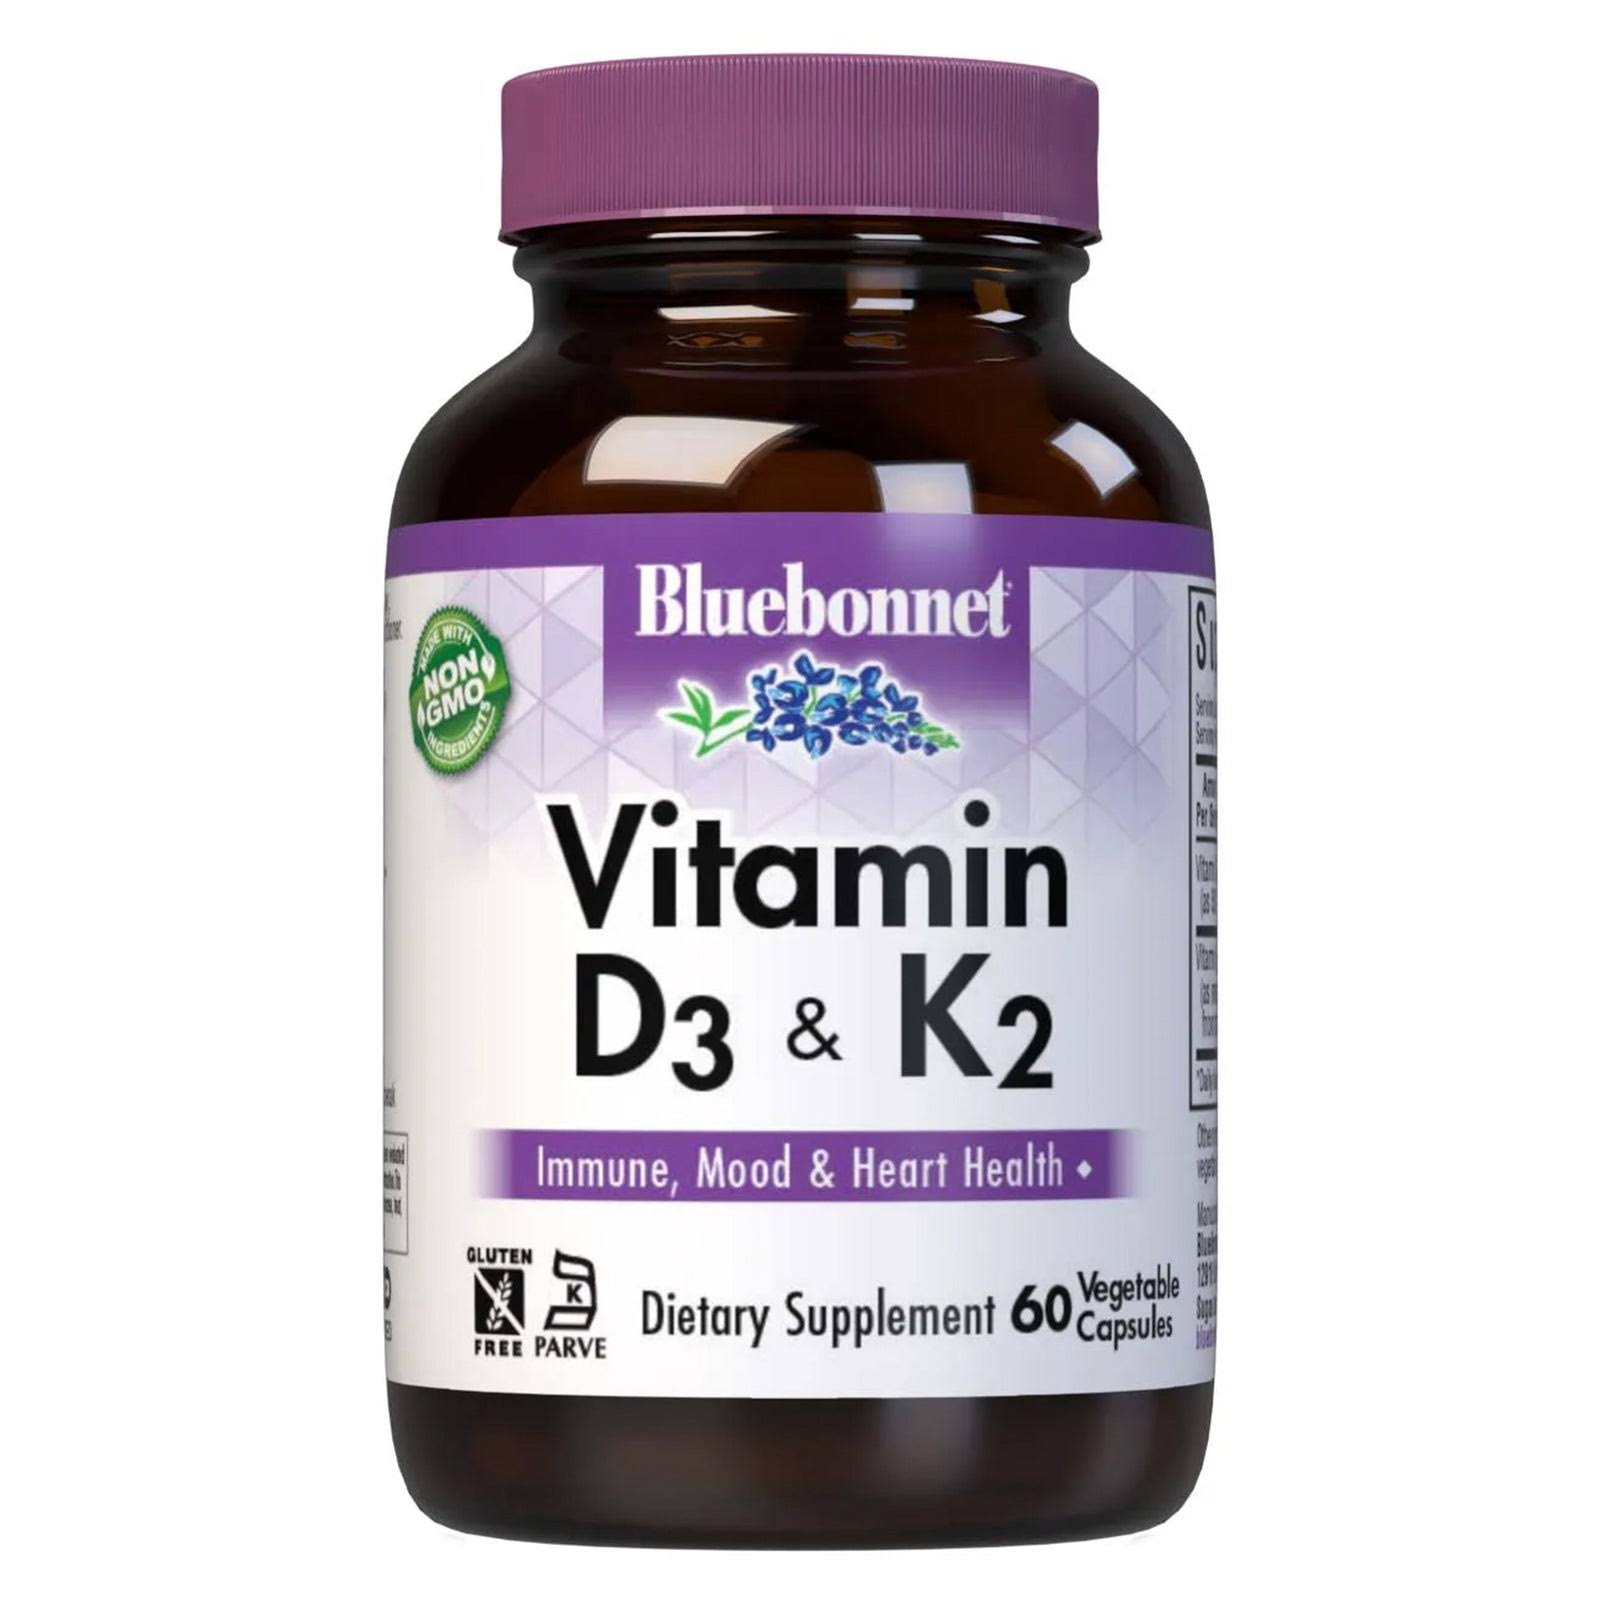 Bluebonnet Nutrition Vitamin D3 & K2 60 Vegetable Capsules